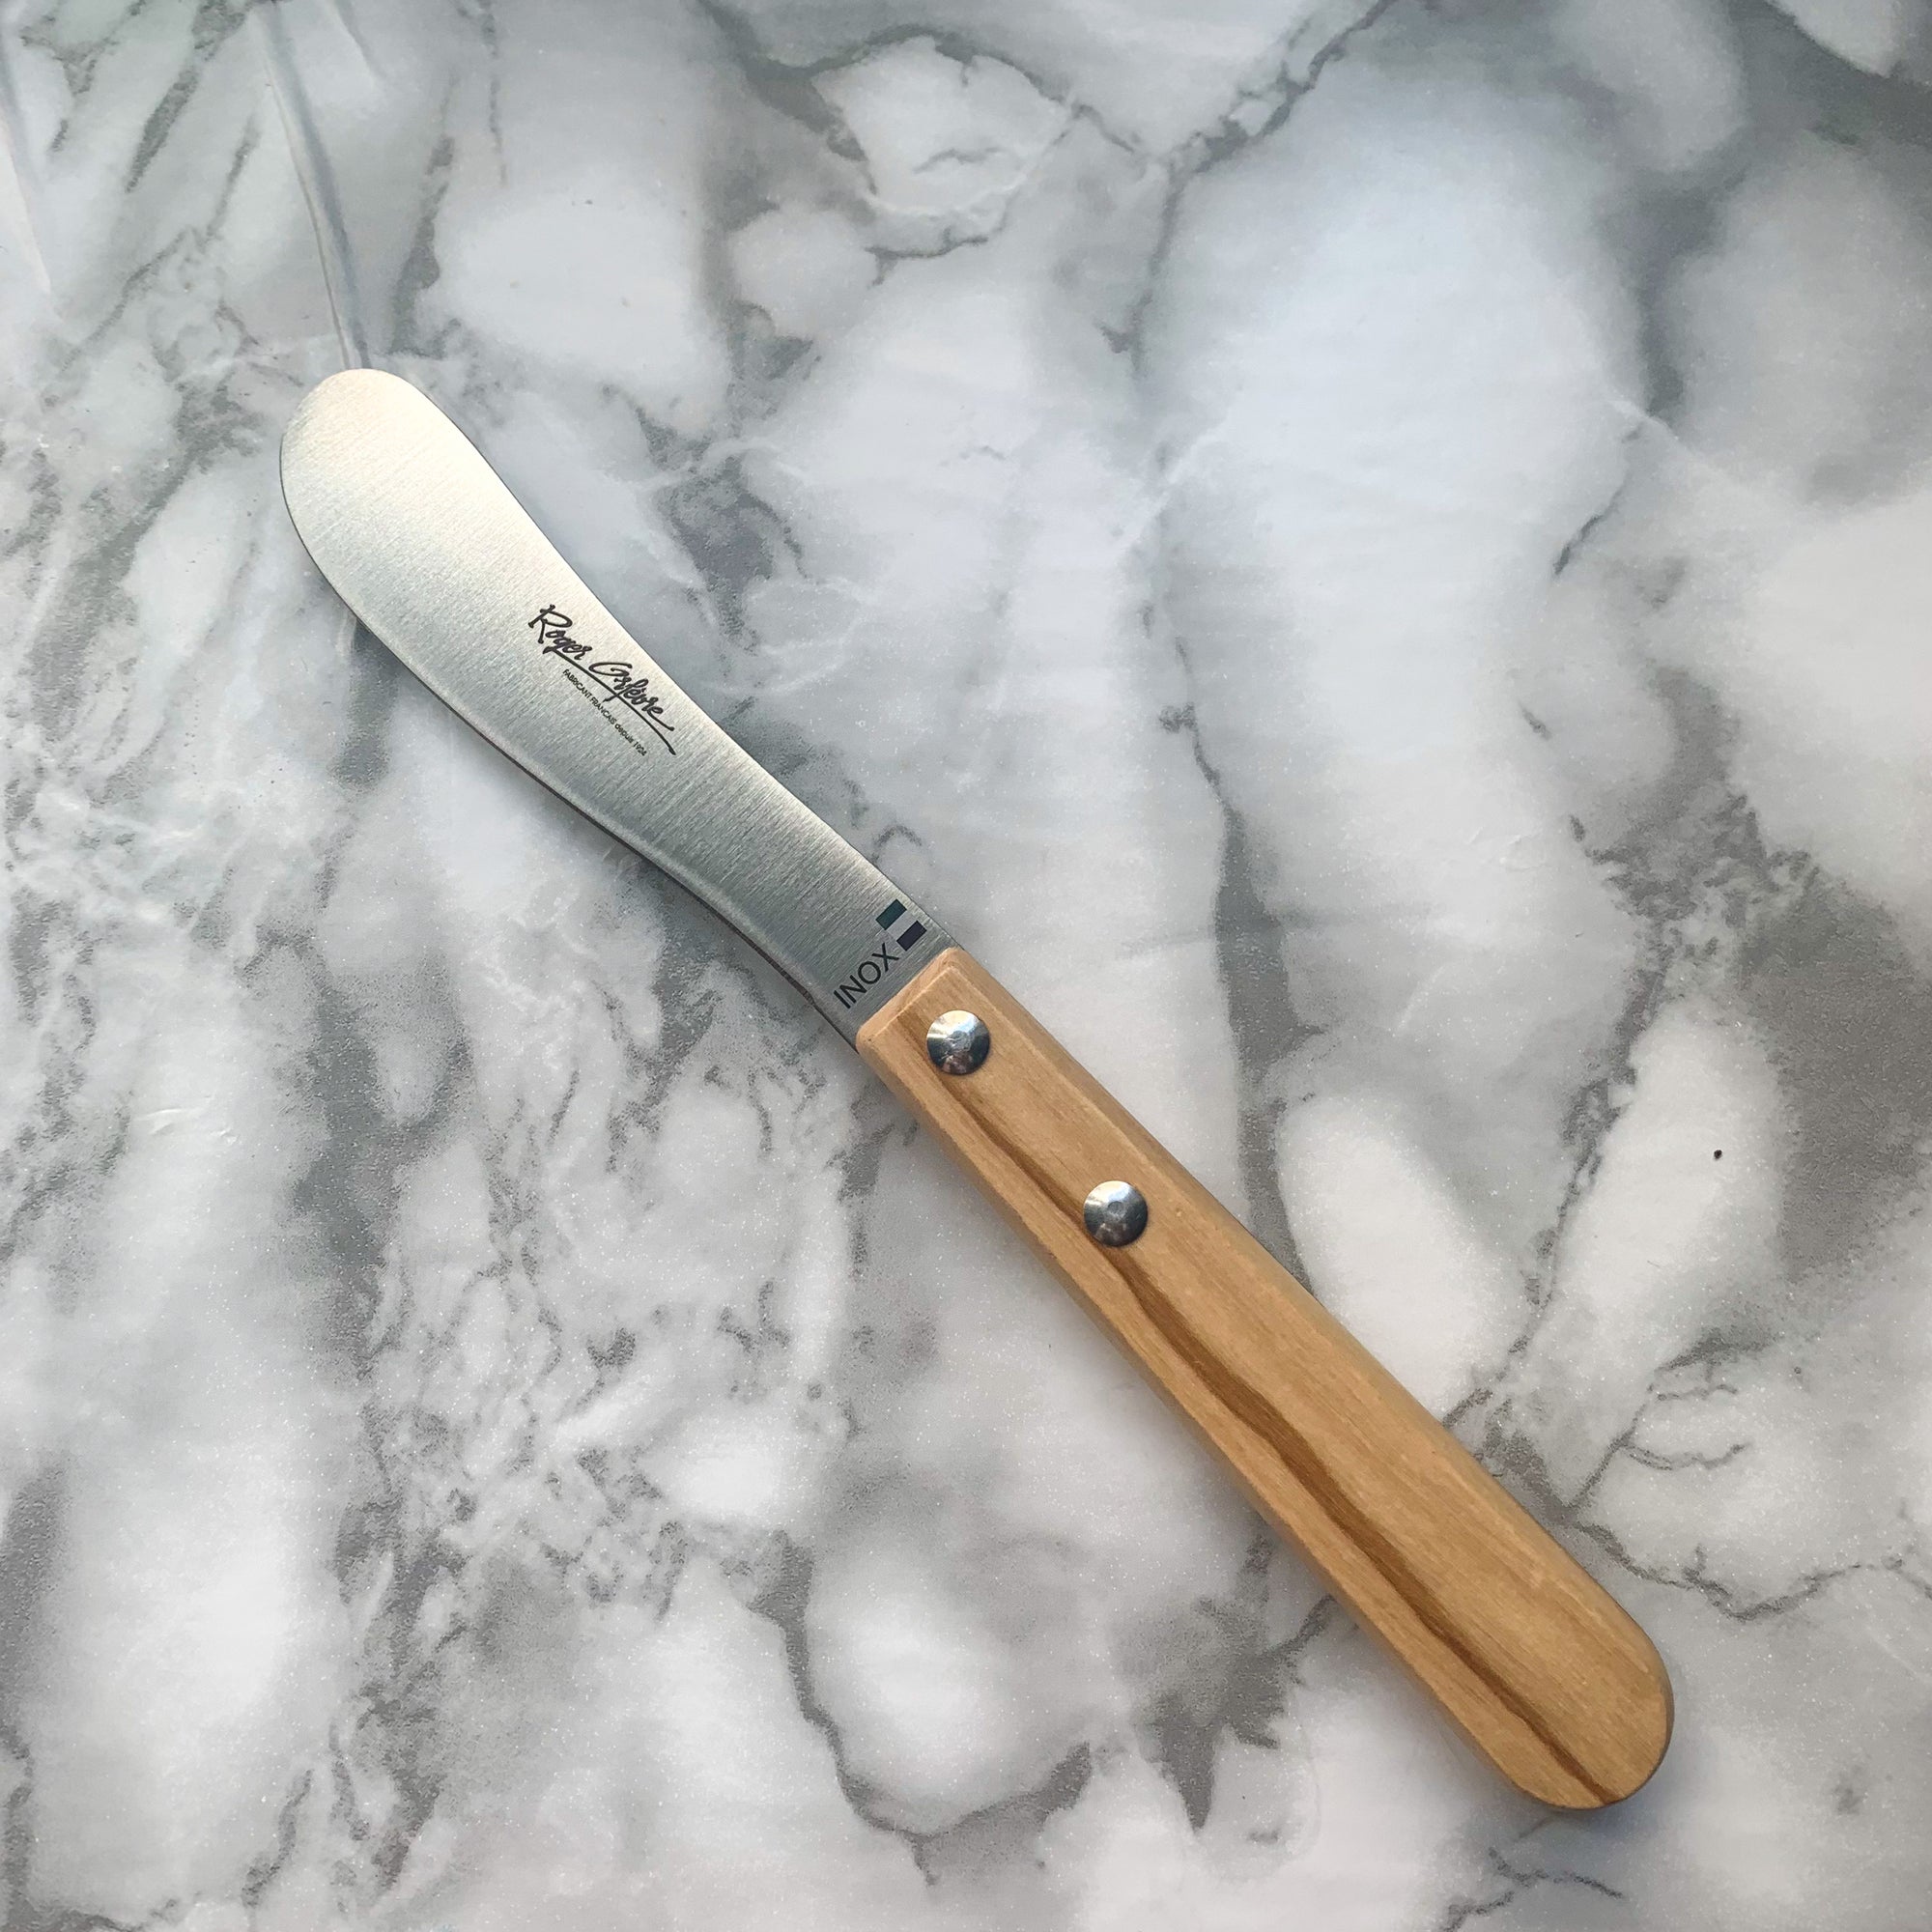 roger orfevre canada butter knife olive wood handle made in france